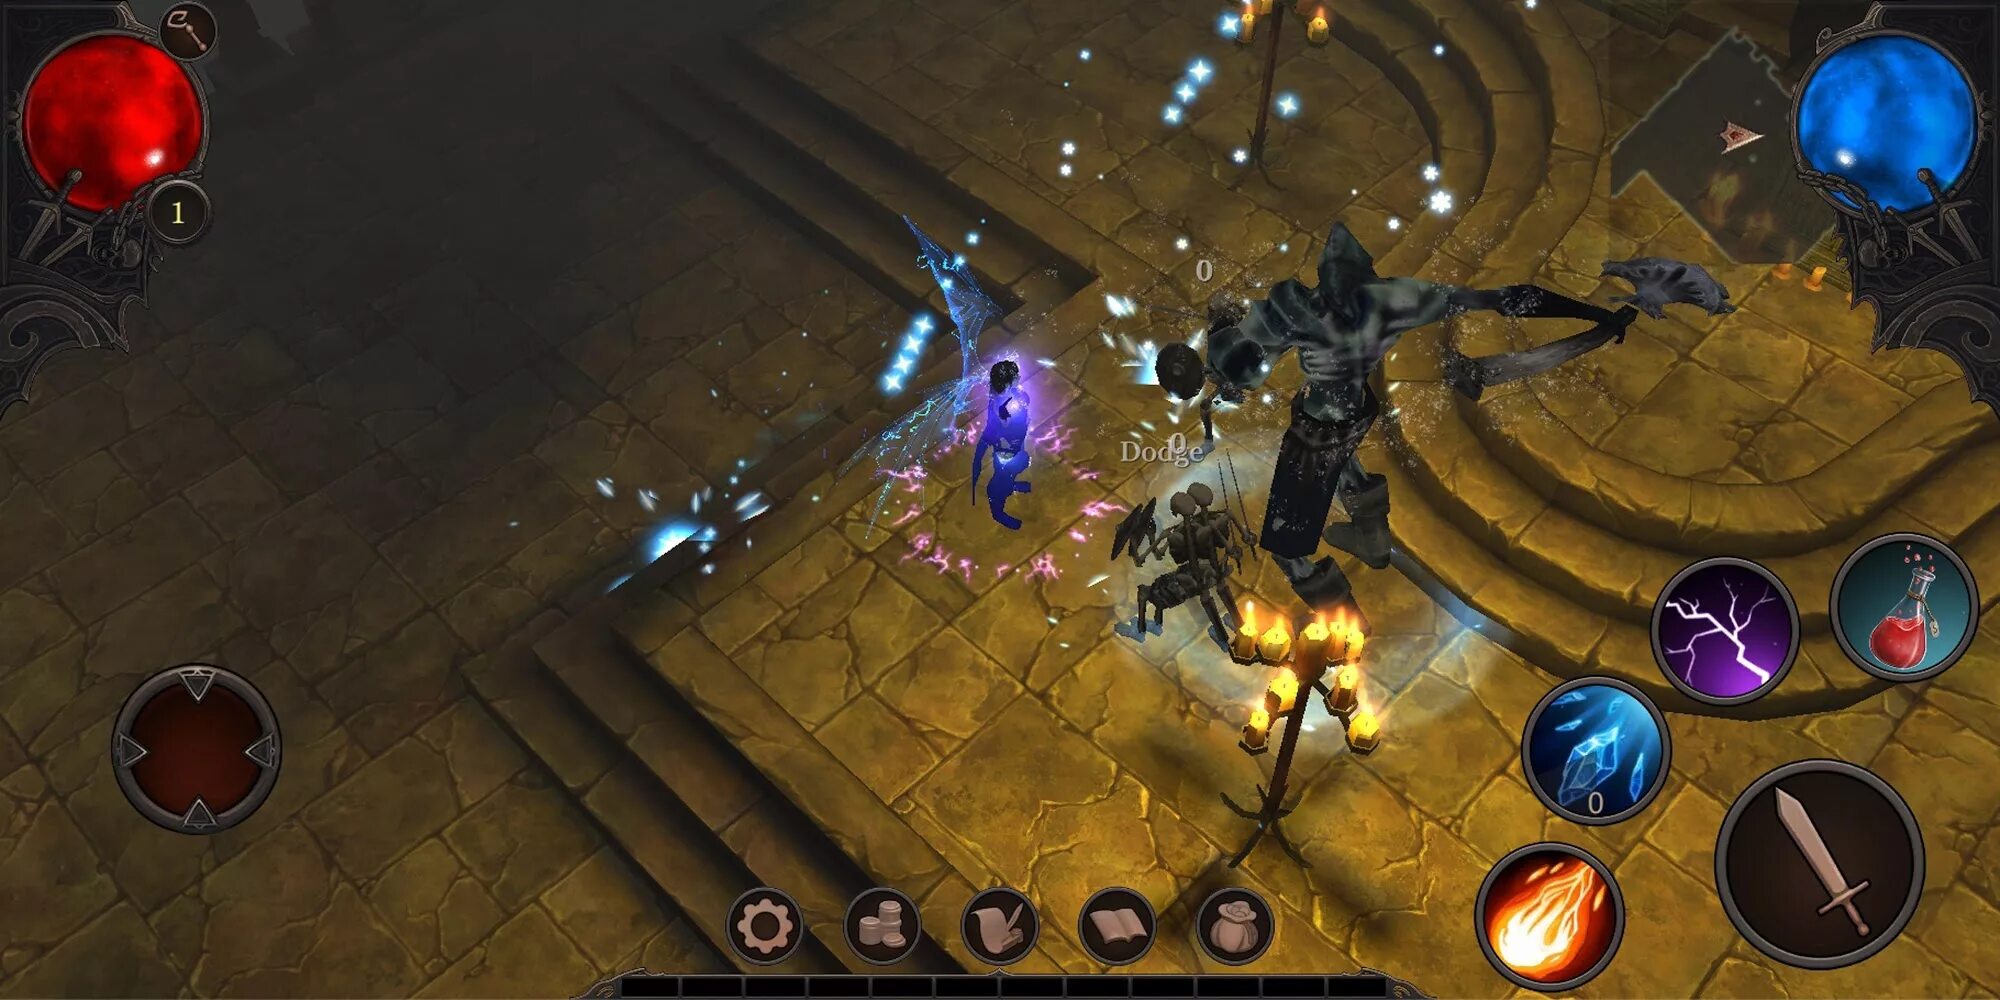 РПГ типа диабло 3. Diablo 3 Android. Vengeance игра на андроид. Диабло мультиплеер. Игры похожие на неудачу